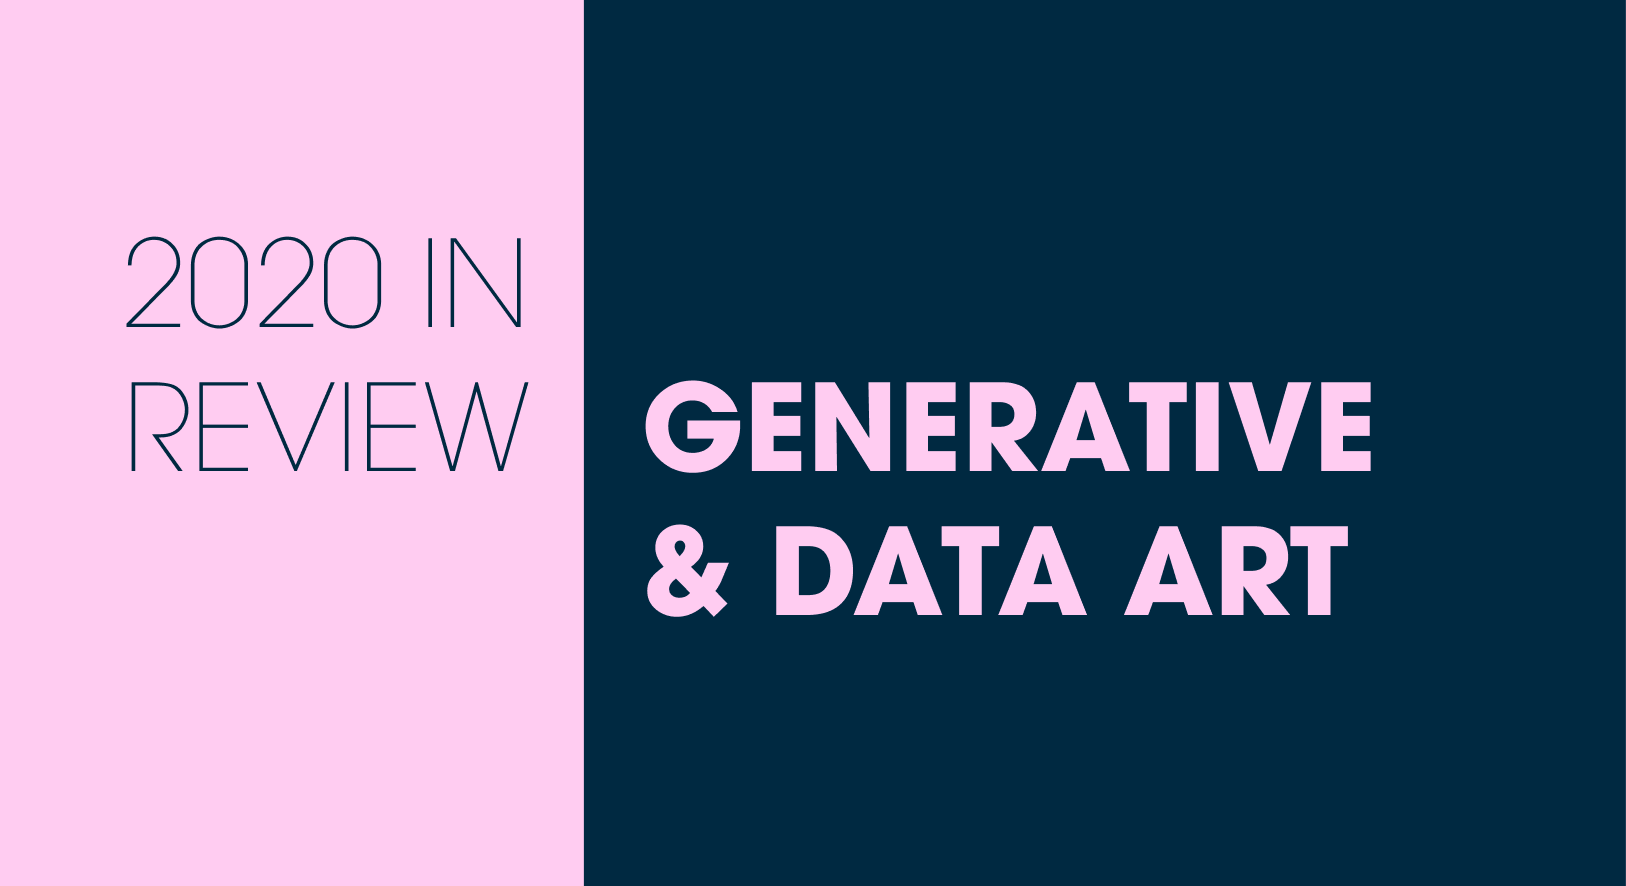 2020 in Review: Generative & Data Art